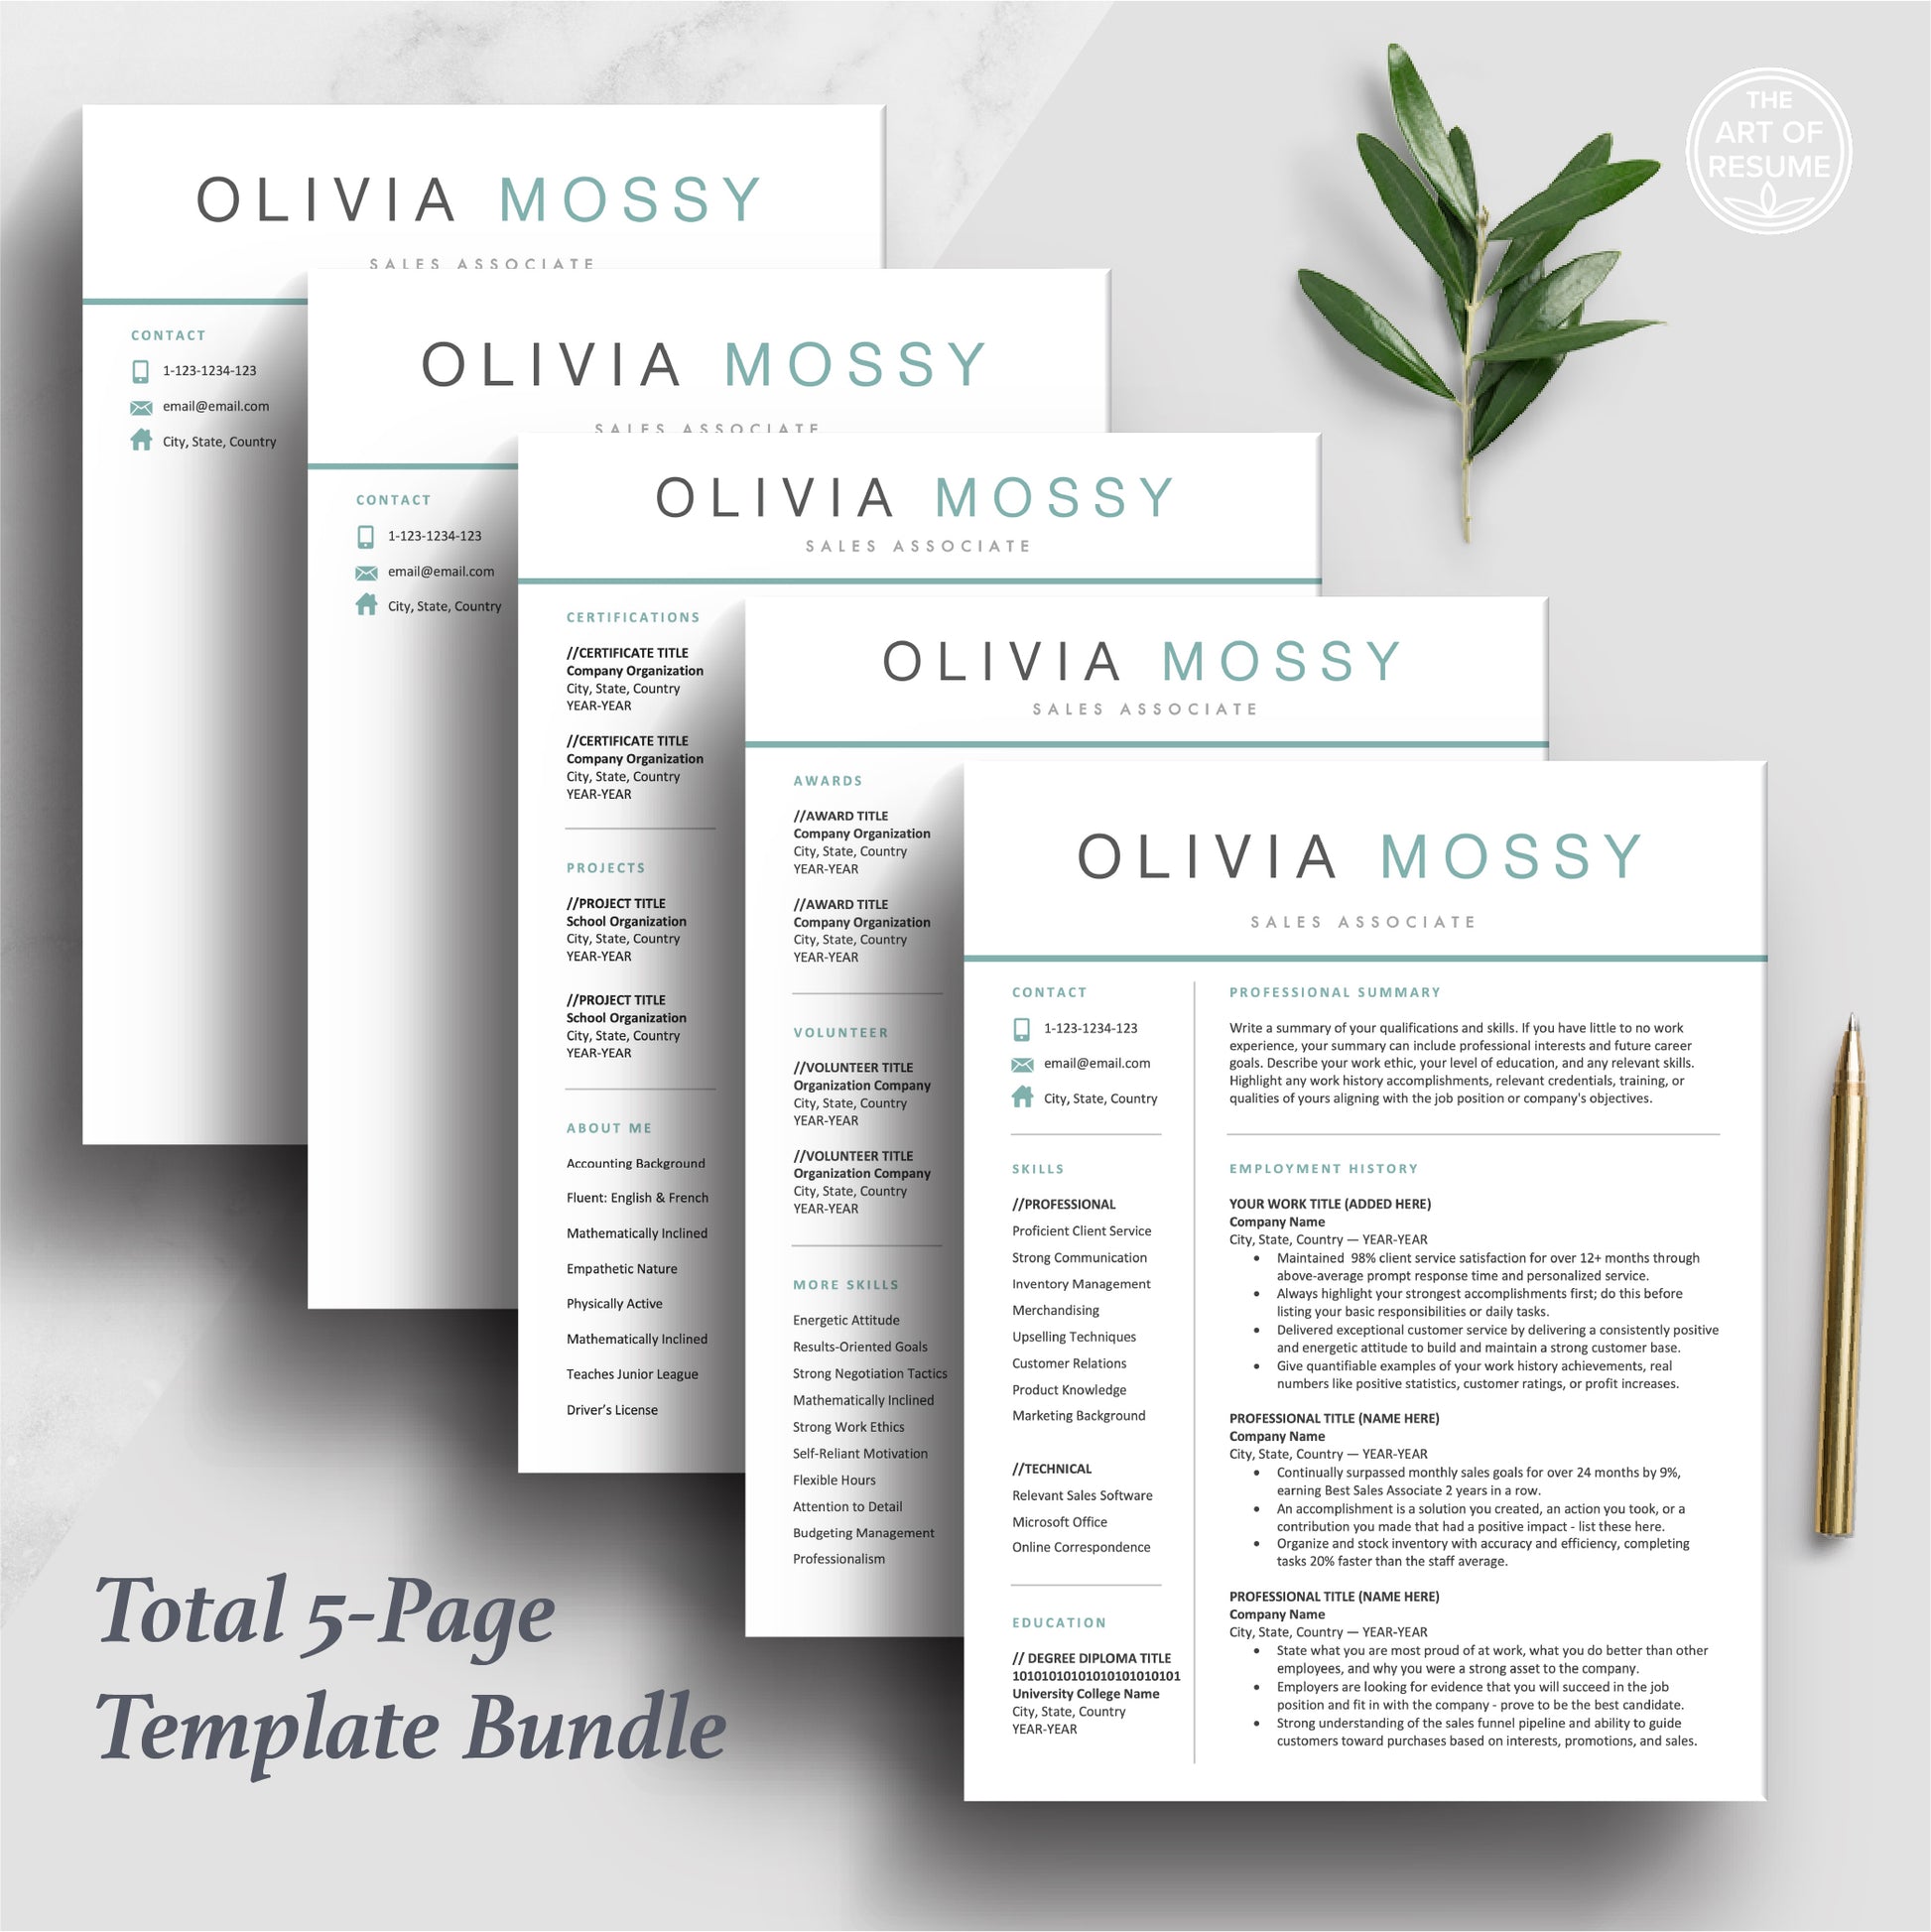 The Art of Resume | Teal Blue Resume Template Design Bundle Download | Total 5 Pages